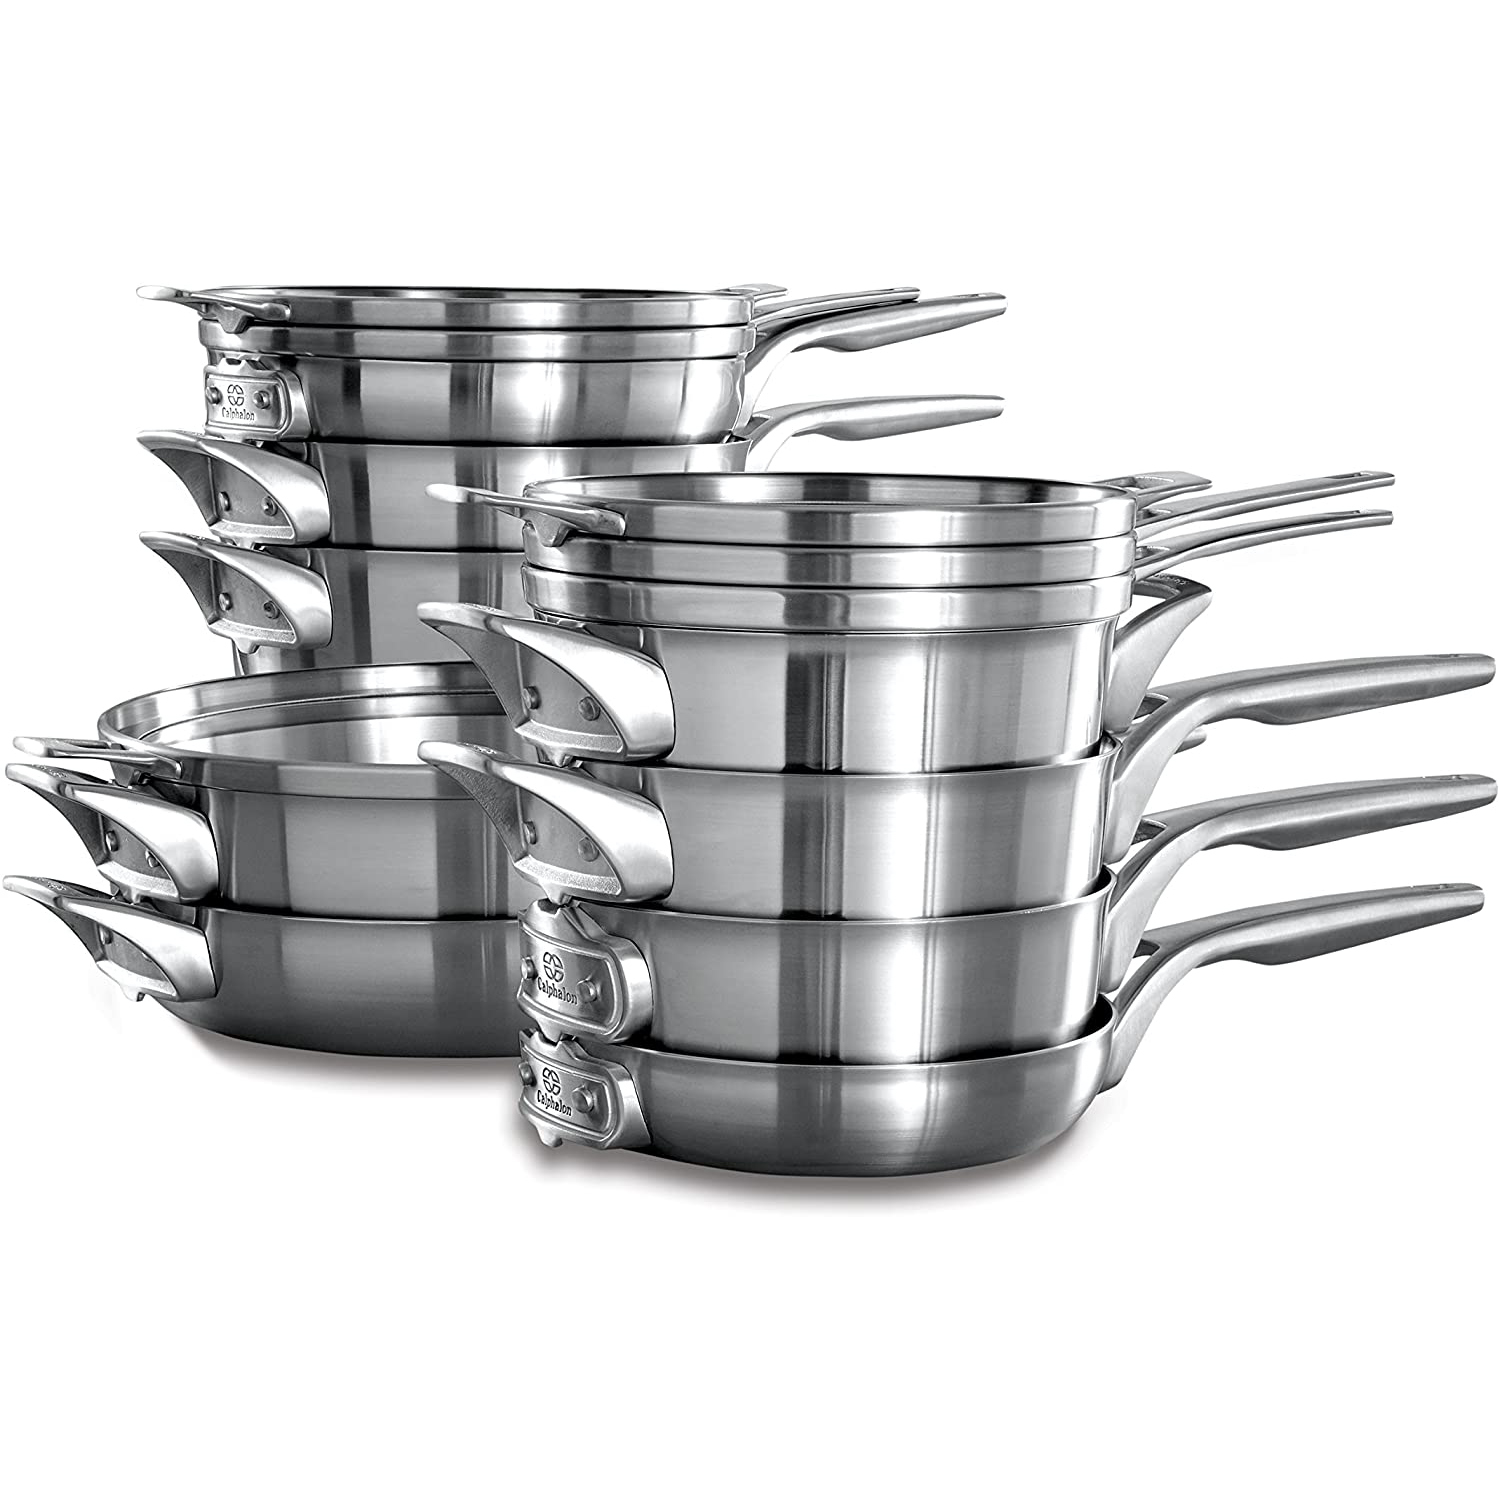 Calphalon Premier Space Saving Stainless Steel 15 Piece Cookware Set